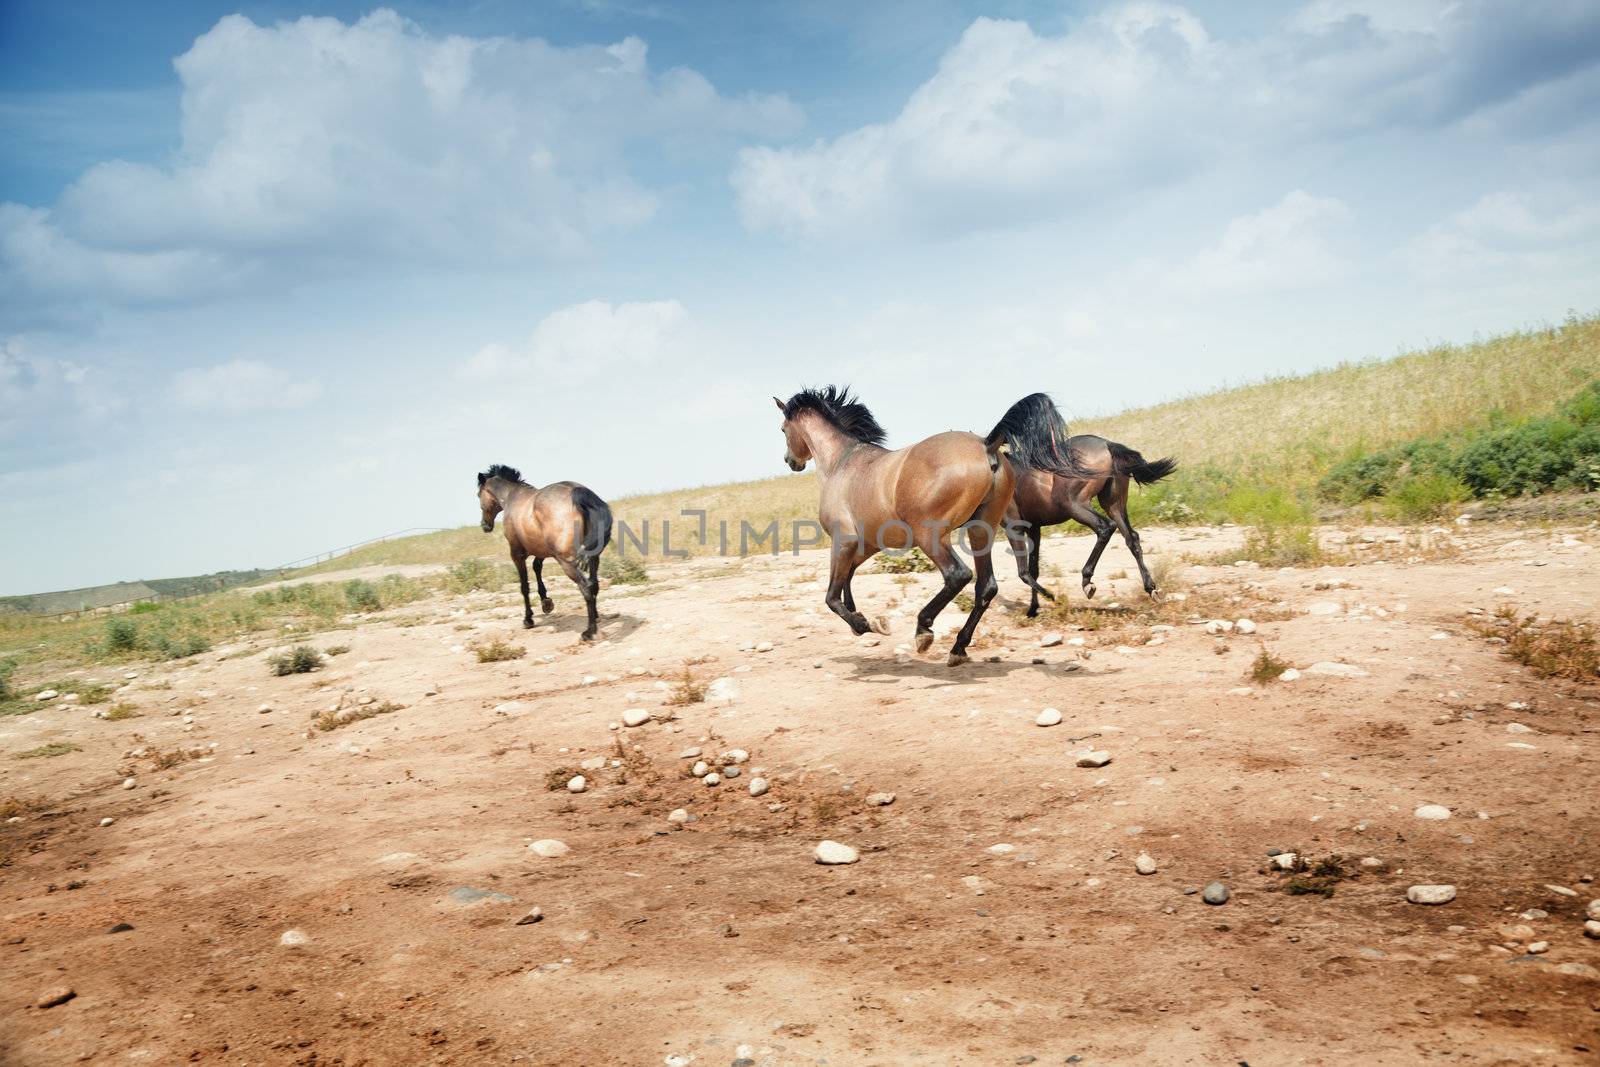 Three running horses. Rear view. Kazakhstan. Natural light and colors